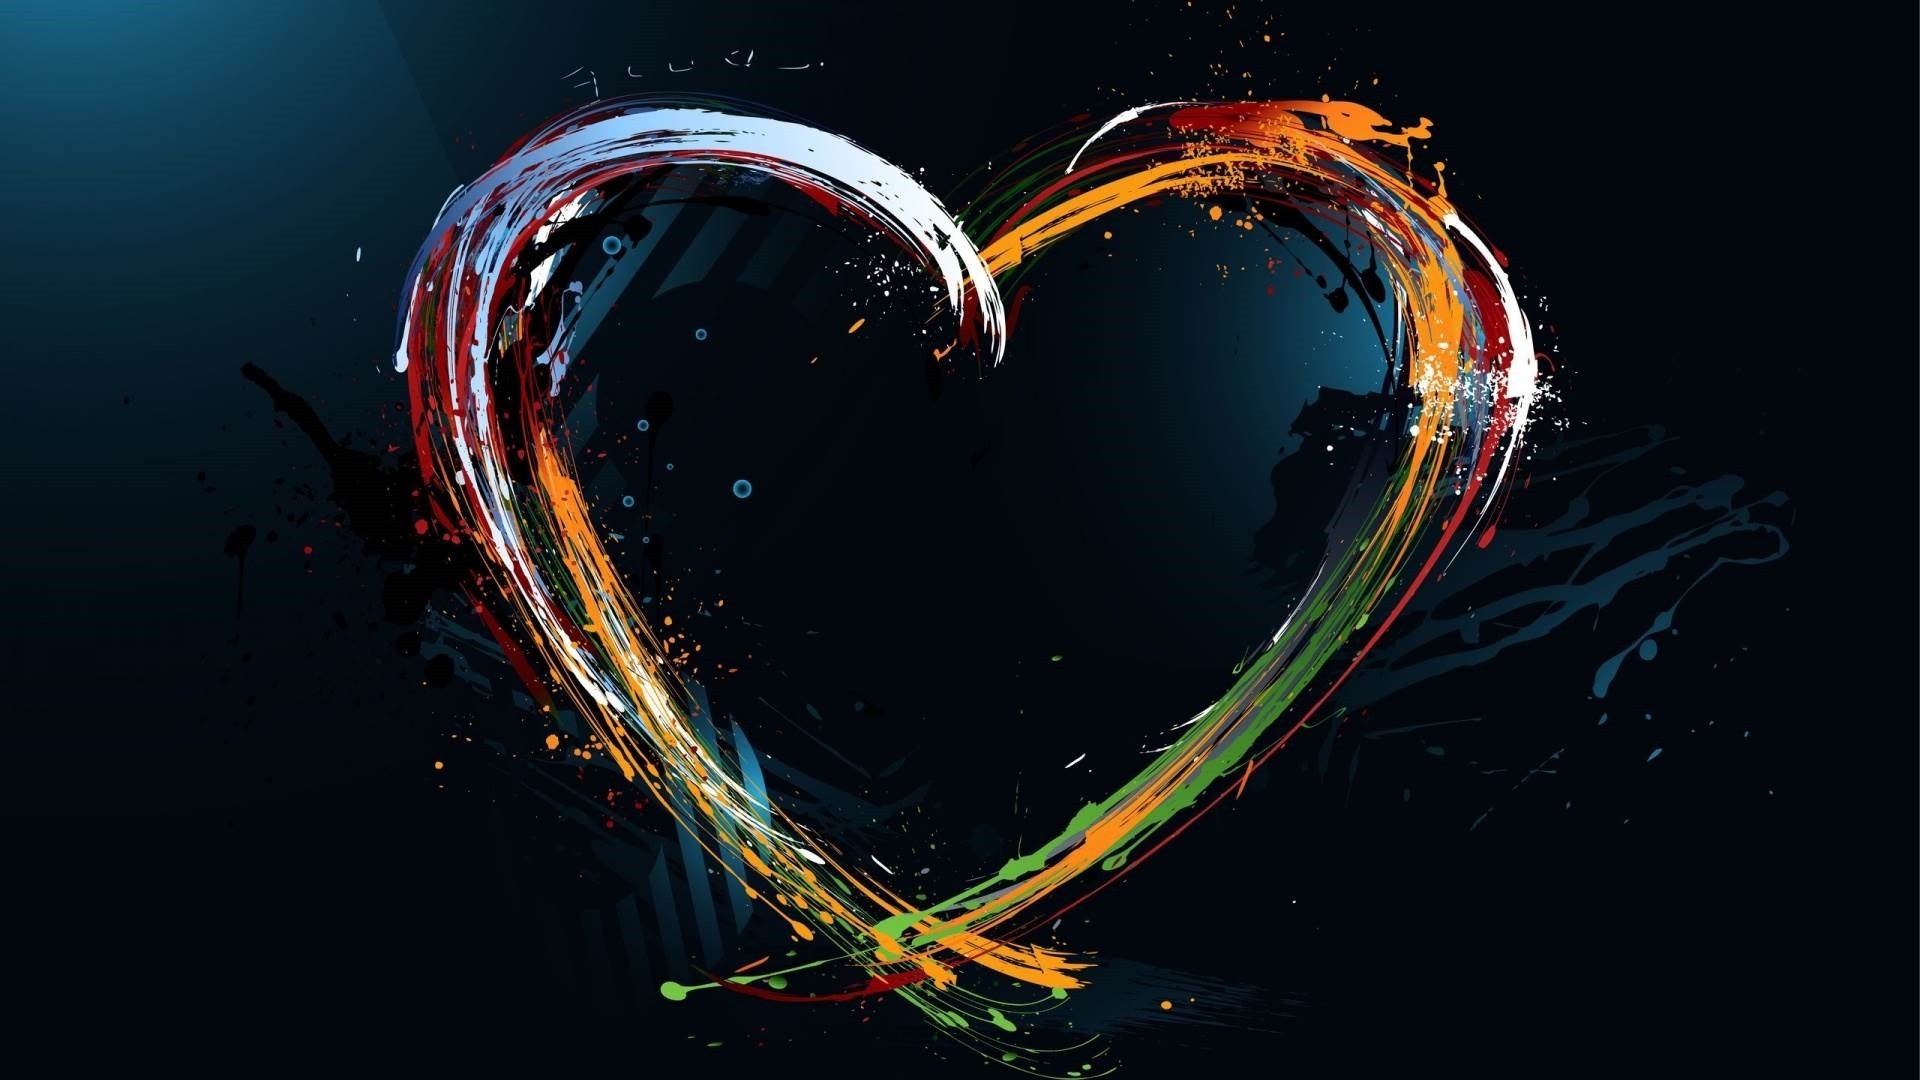 Black Background Heart Wallpaper Image For Free Download - Pngtree